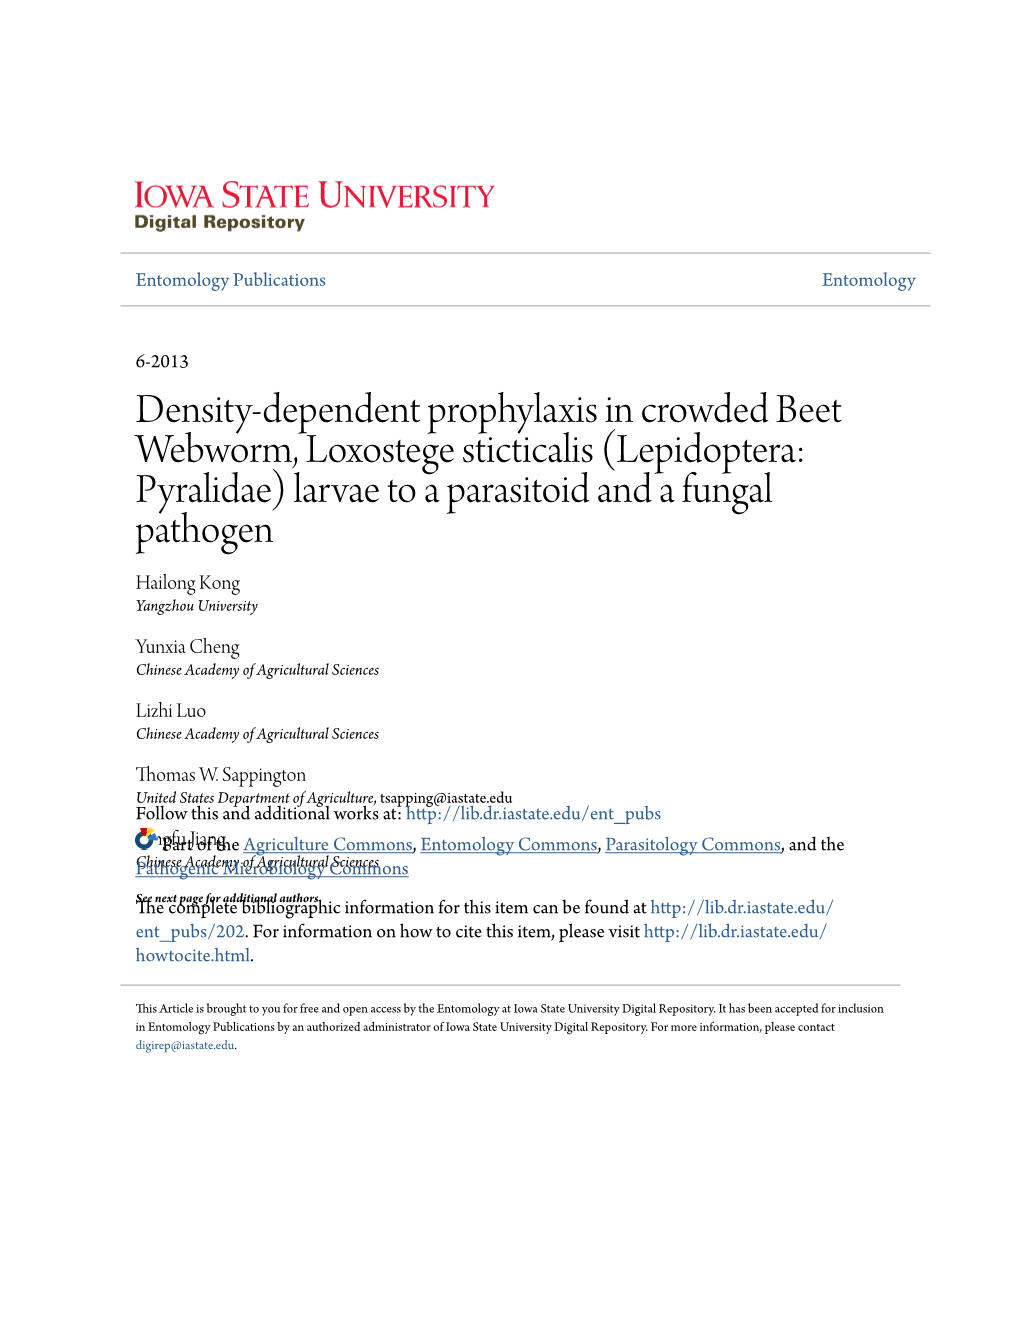 Density-Dependent Prophylaxis in Crowded Beet Webworm